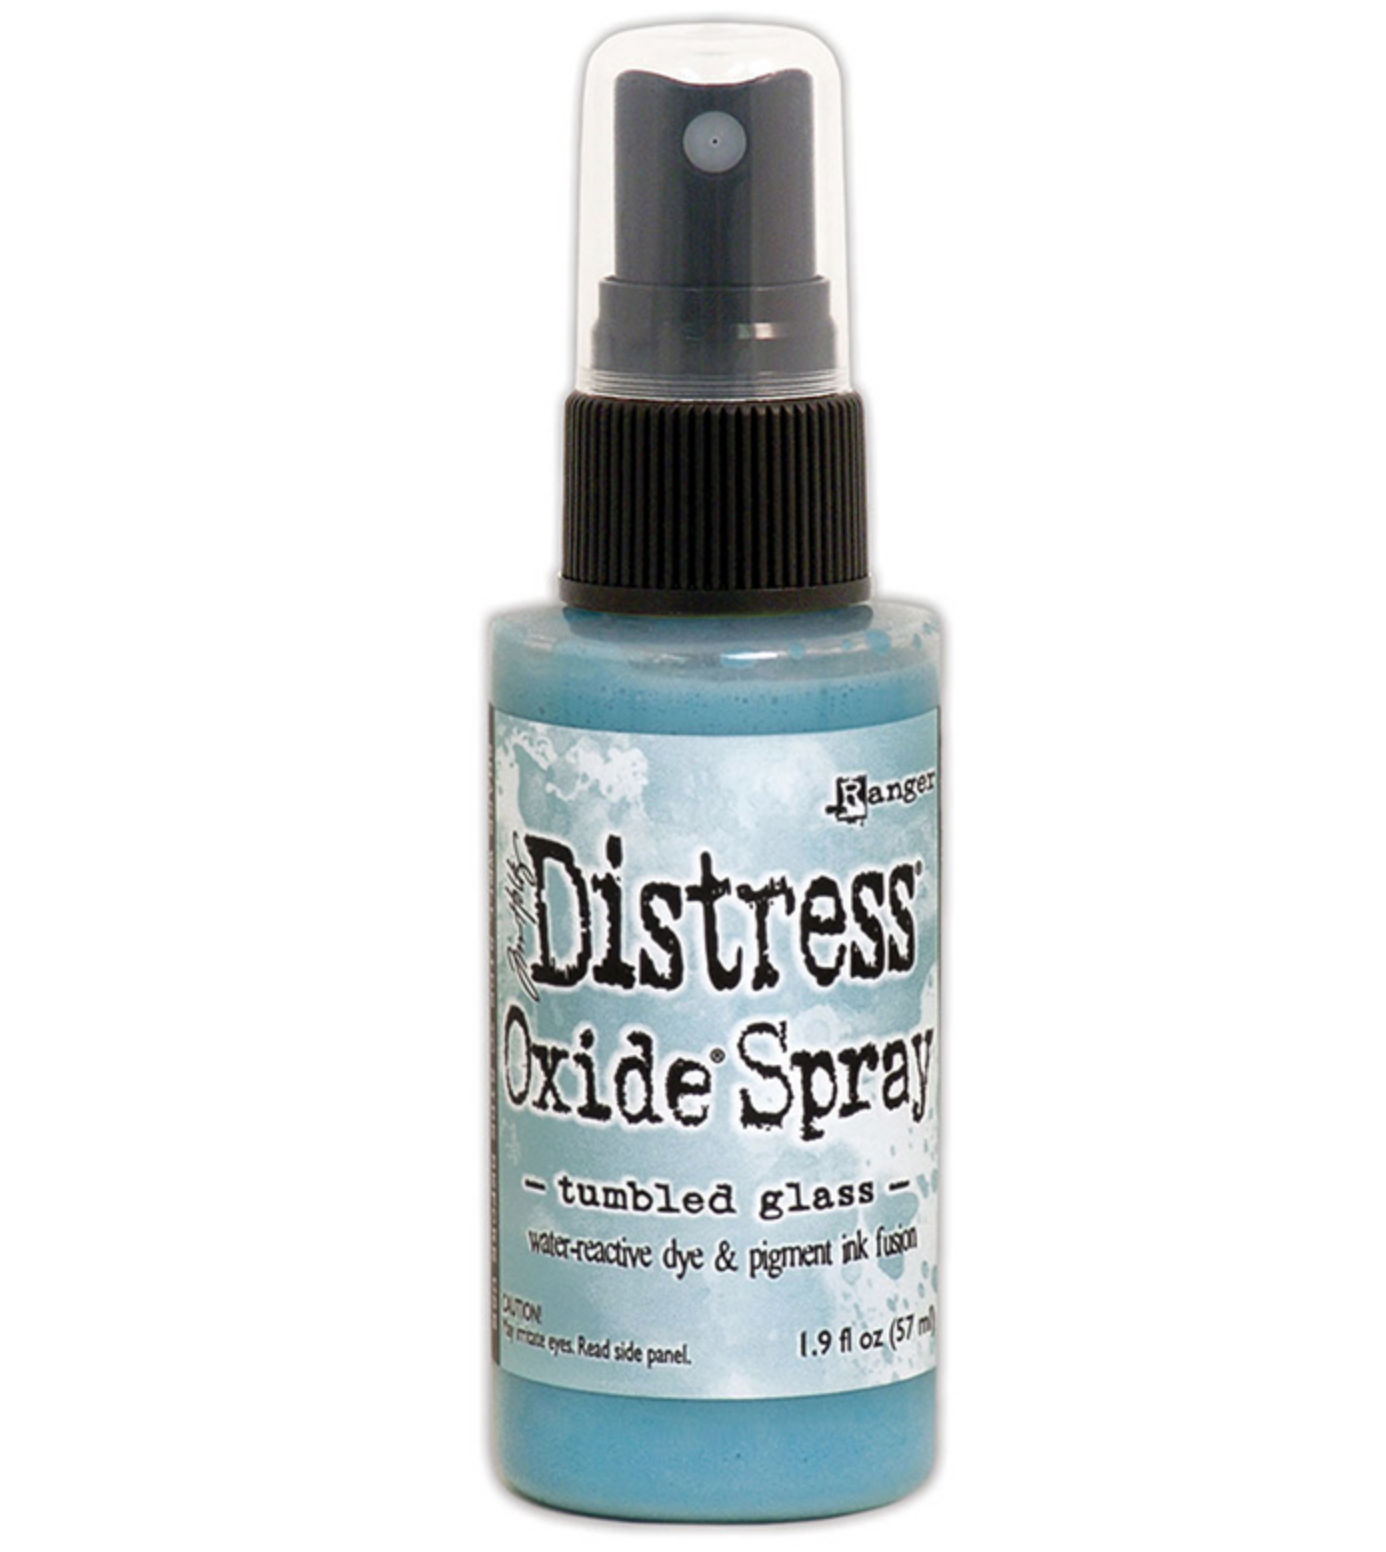 Tim Holtz Distress Oxide Spray - Tumbled Glass - Ranger Ink